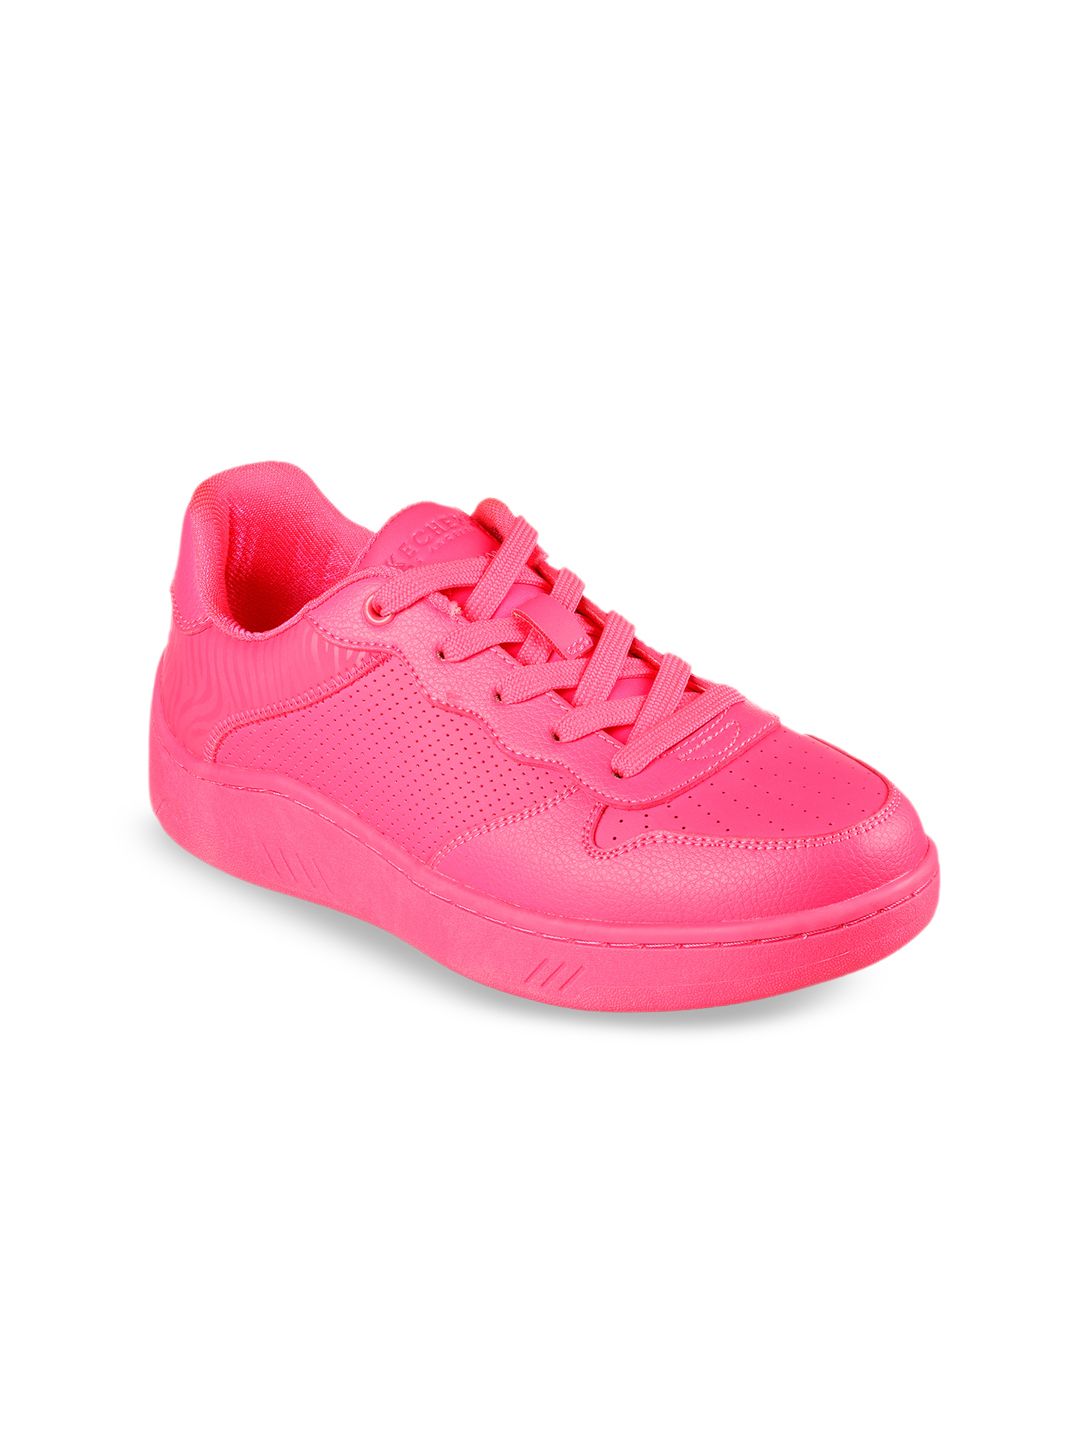 Skechers Women Pink Solid Sneakers Price in India